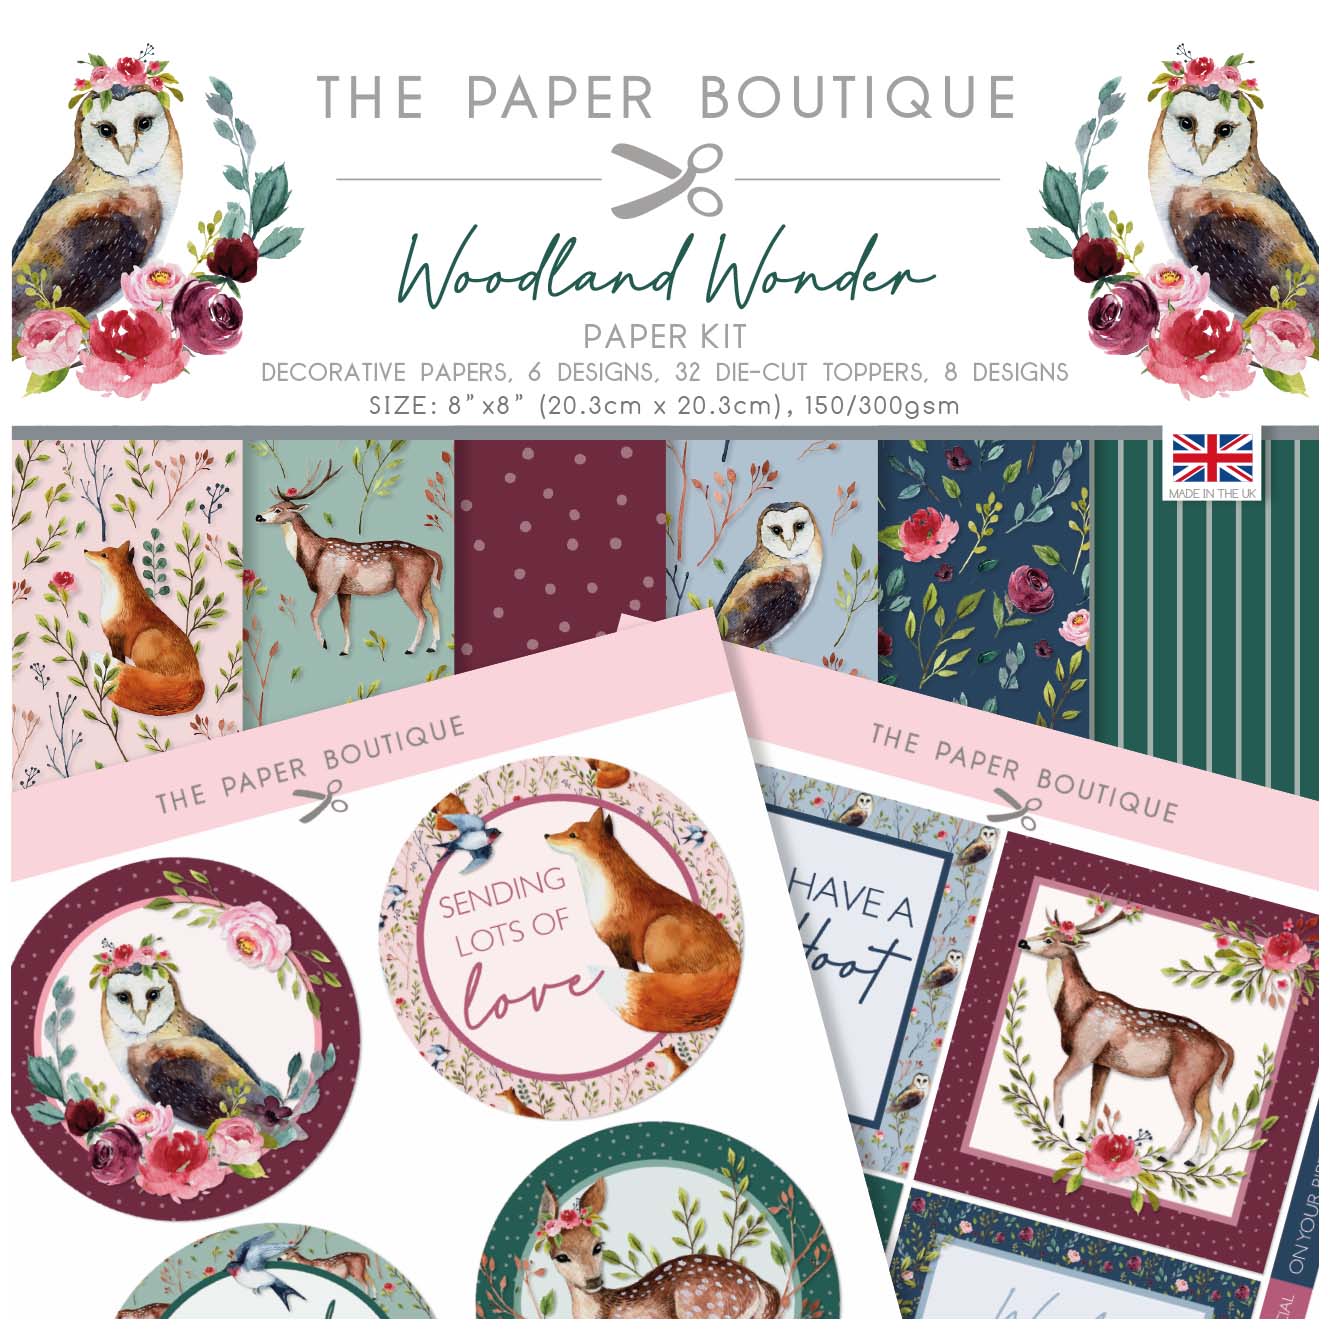 The Paper Boutique Woodland Wonder Paper Kit